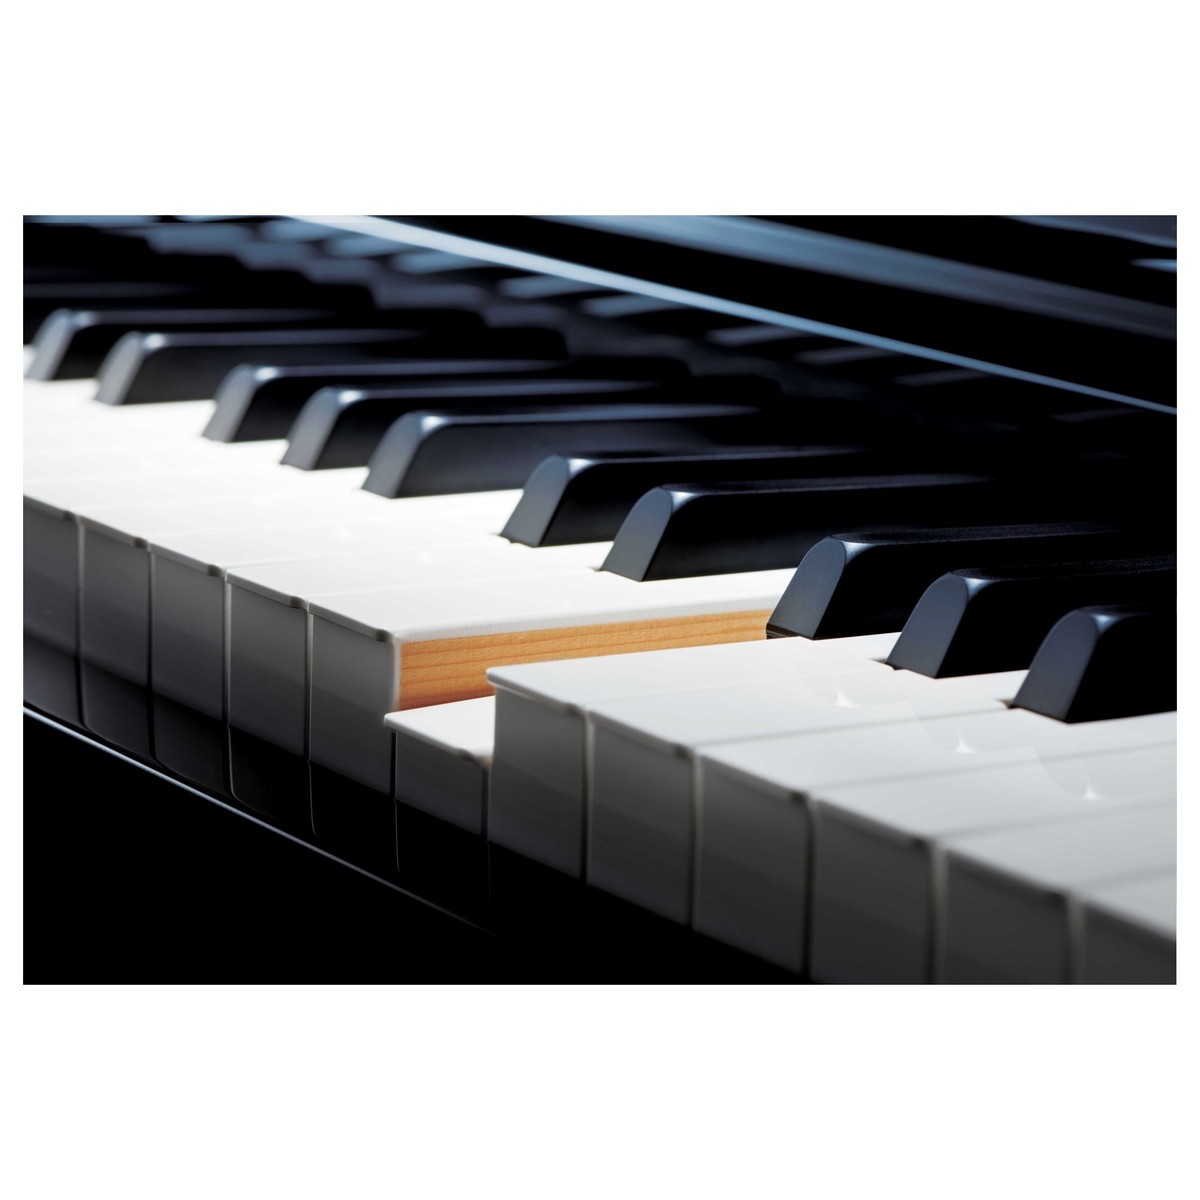 Casio GP-500 Grand Hybrid Piano wooden keys